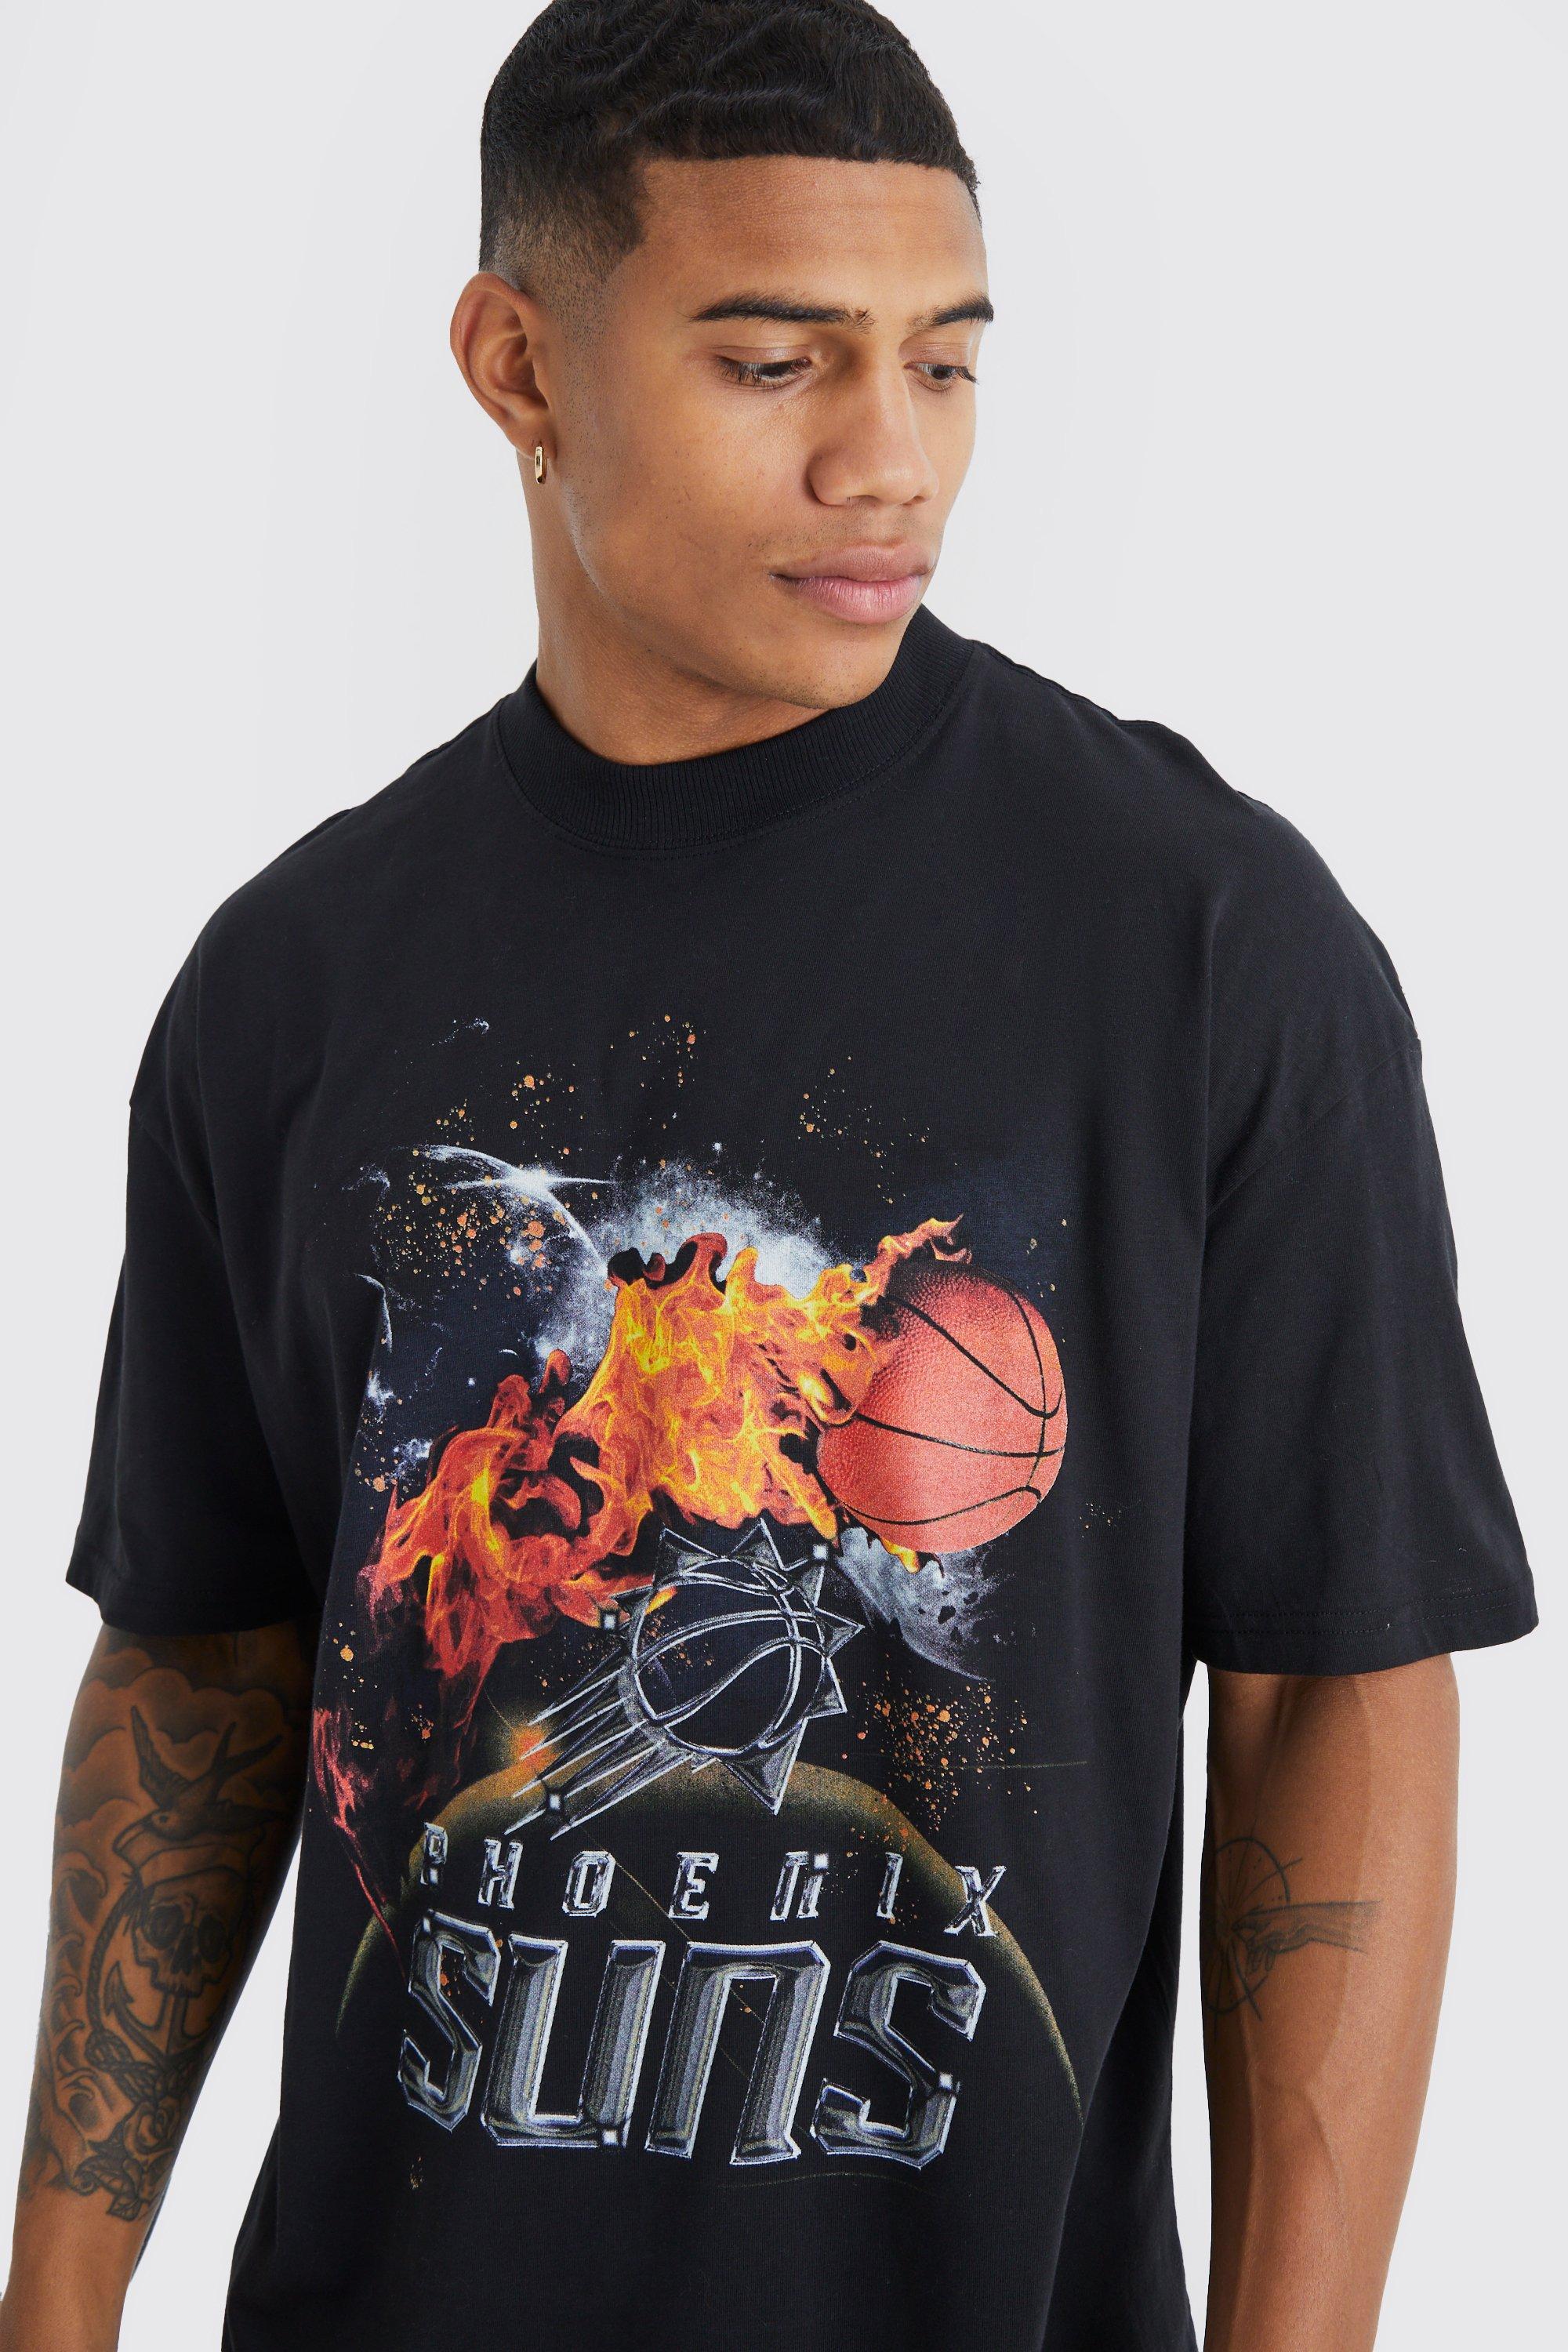 Phoenix Suns Nike Men's NBA Long-Sleeve T-Shirt in Black, Size: Small | DZ0364-010